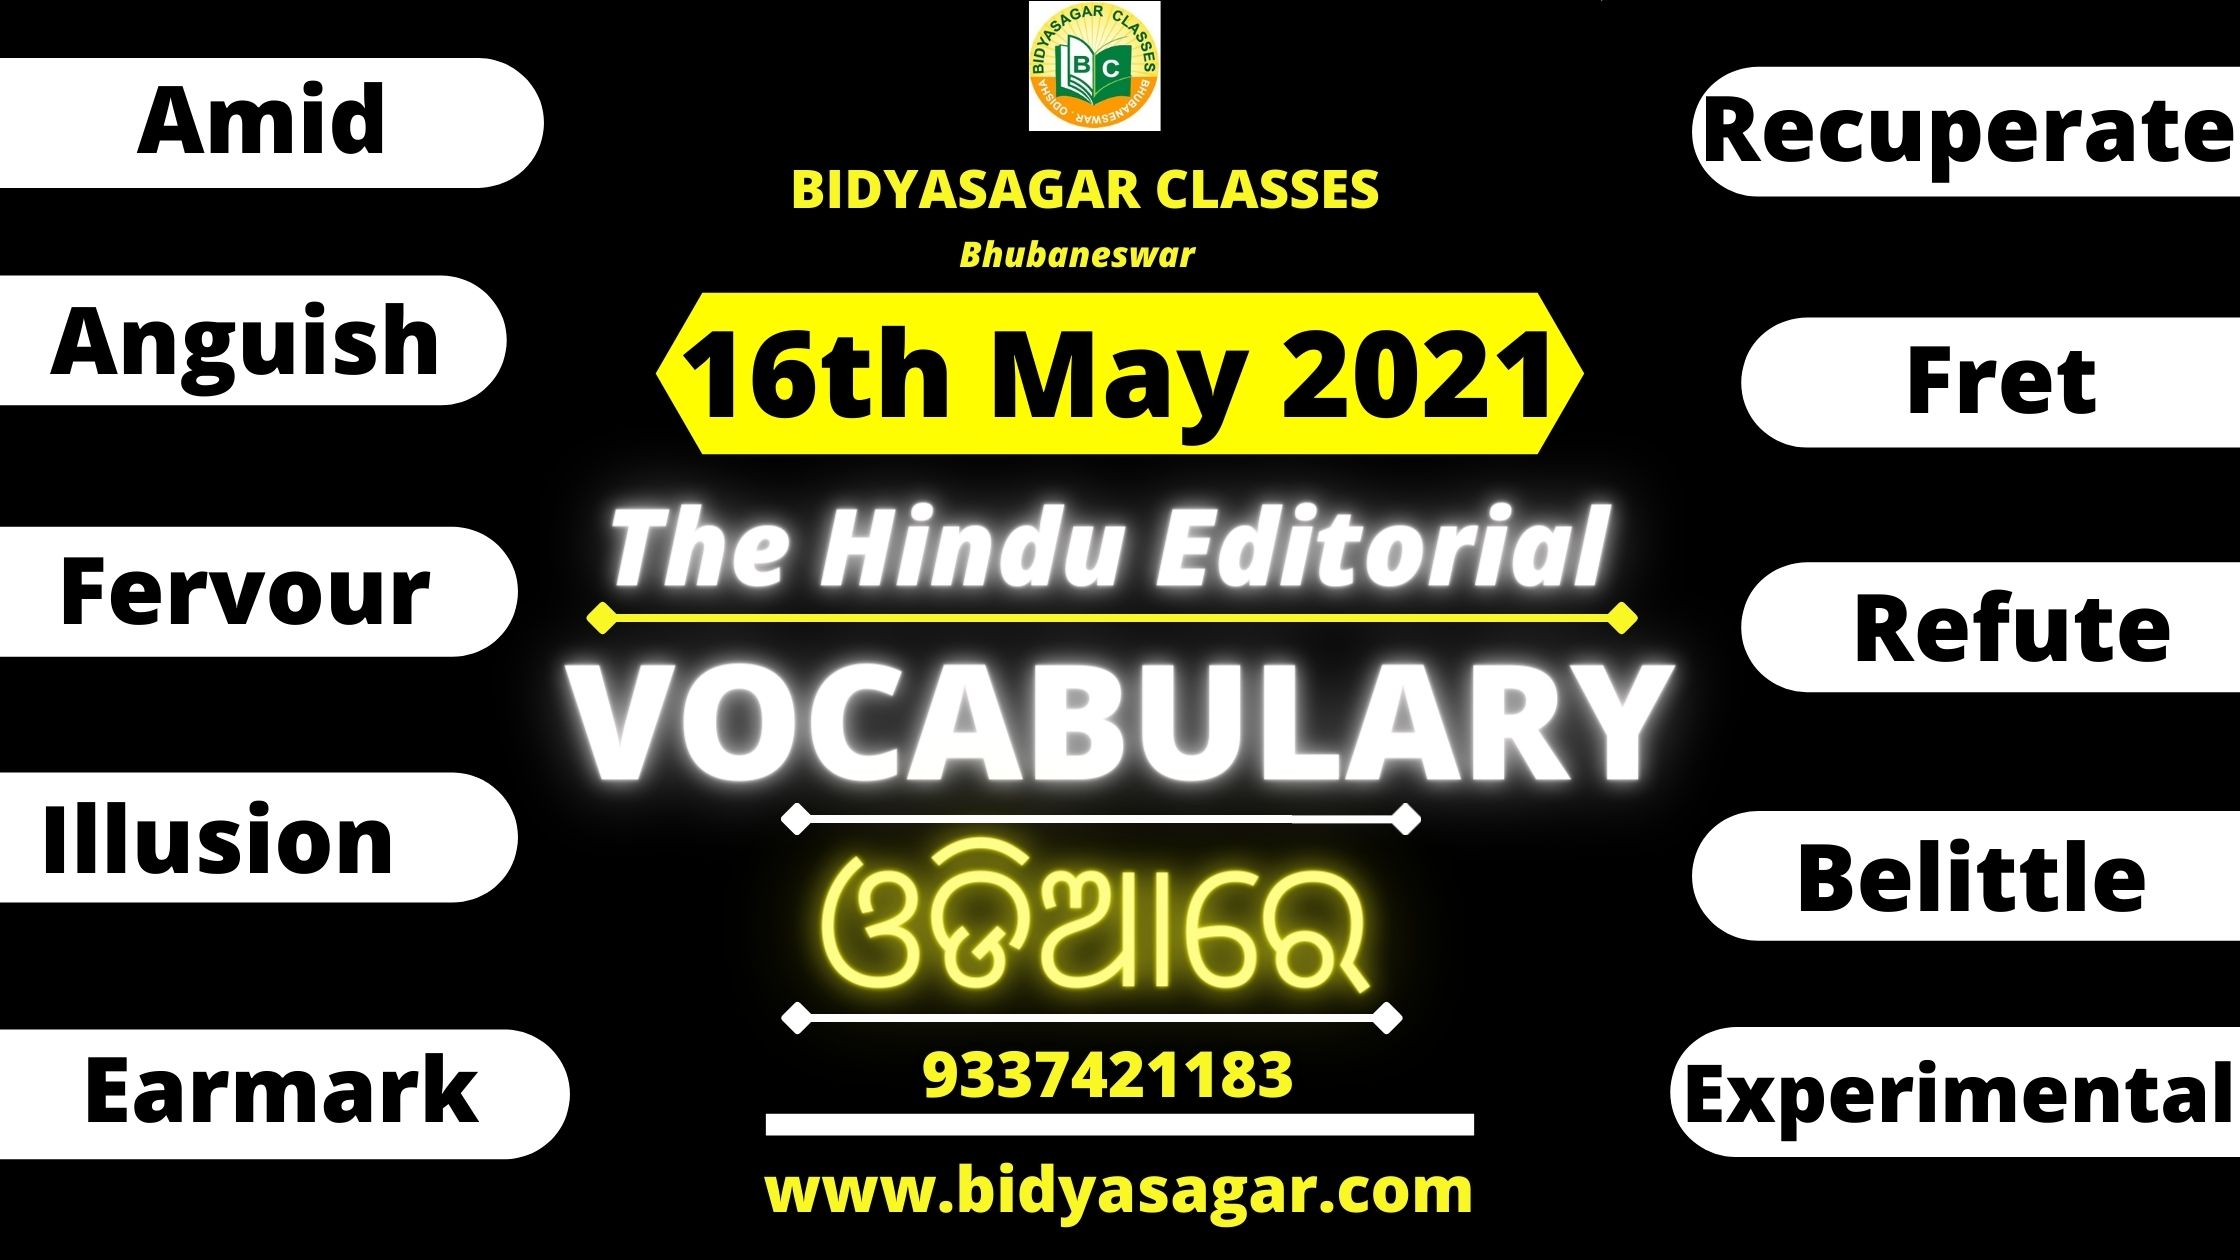 The Hindu Editorial Vocabulary of 16th May 2021